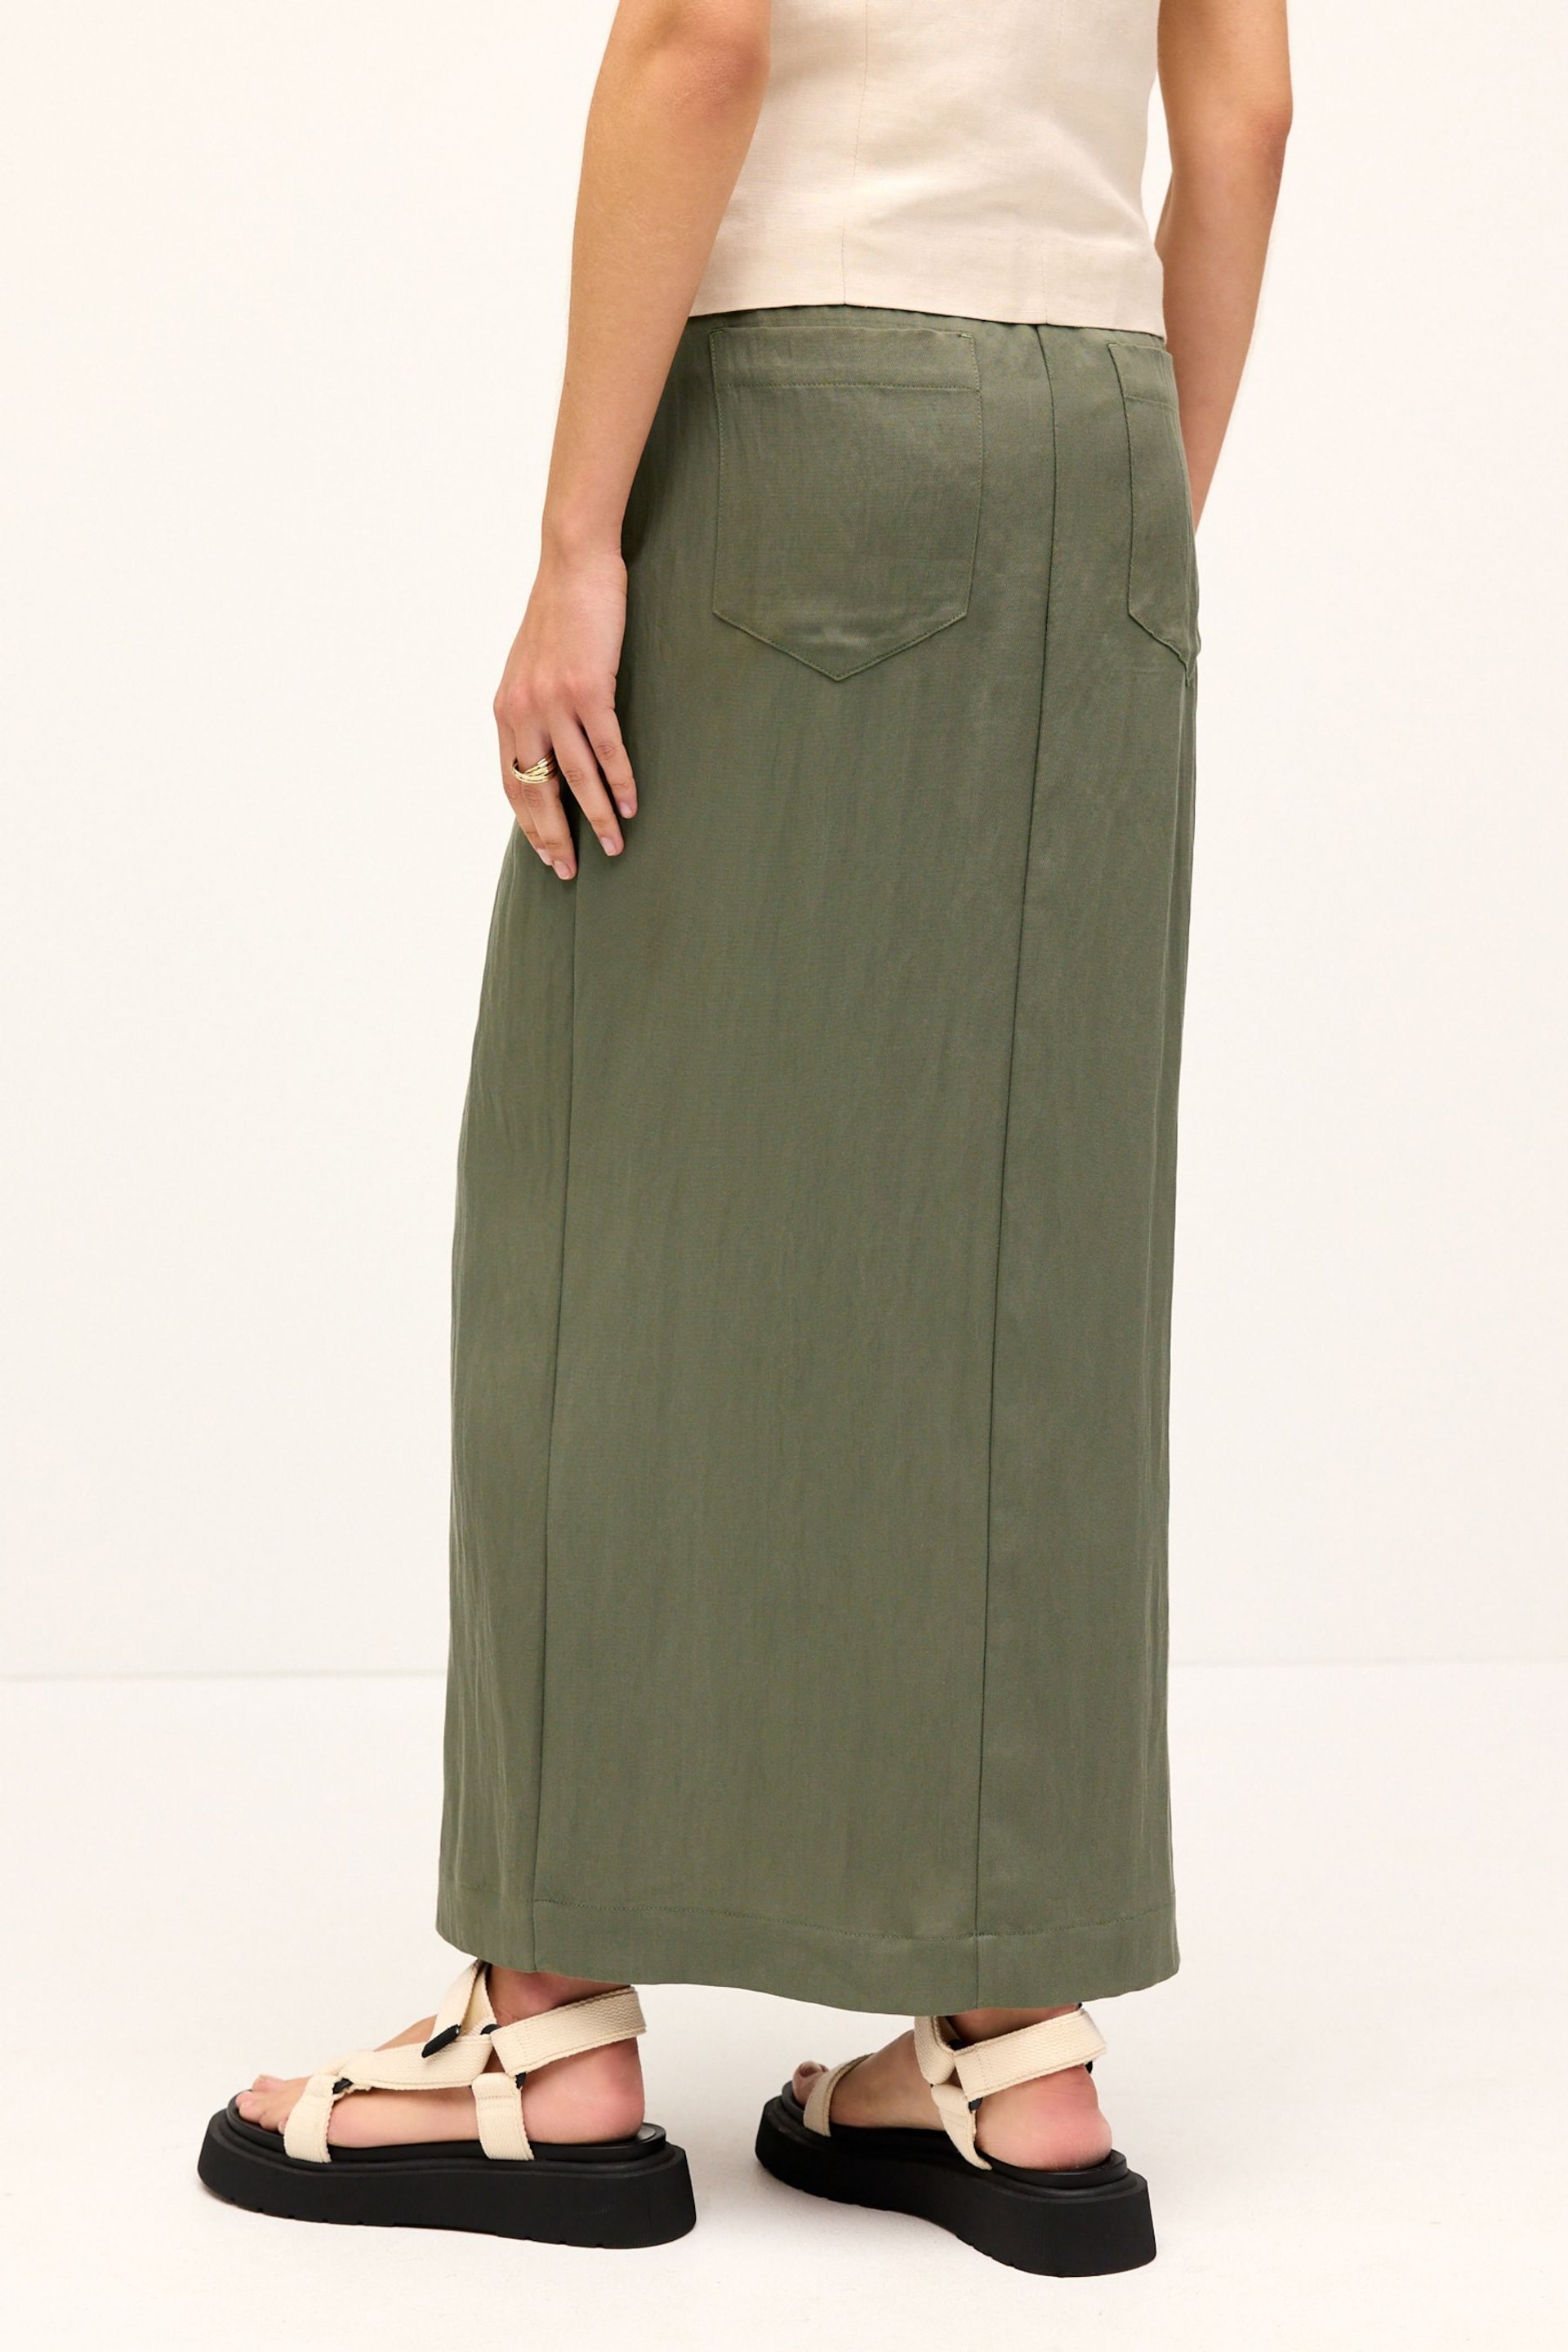 Khaki Green Utility Midi Skirt With Centre Slit - Image 4 of 7